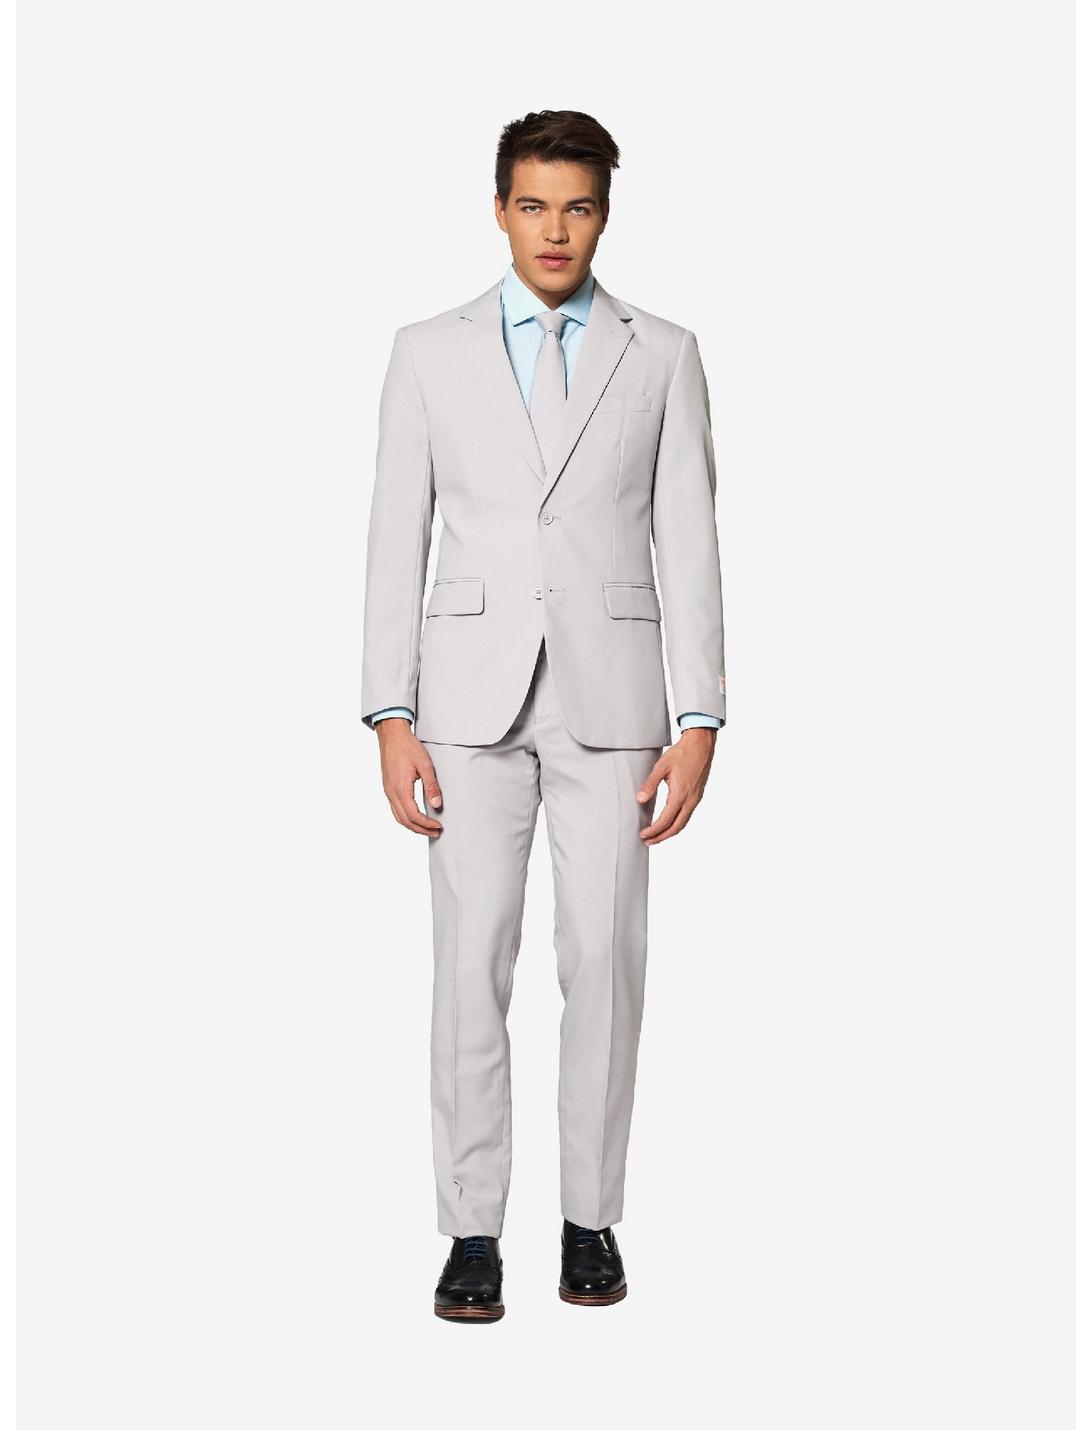 Opposuits Men's Groovy Grey Solid Color Suit, GREY, hi-res